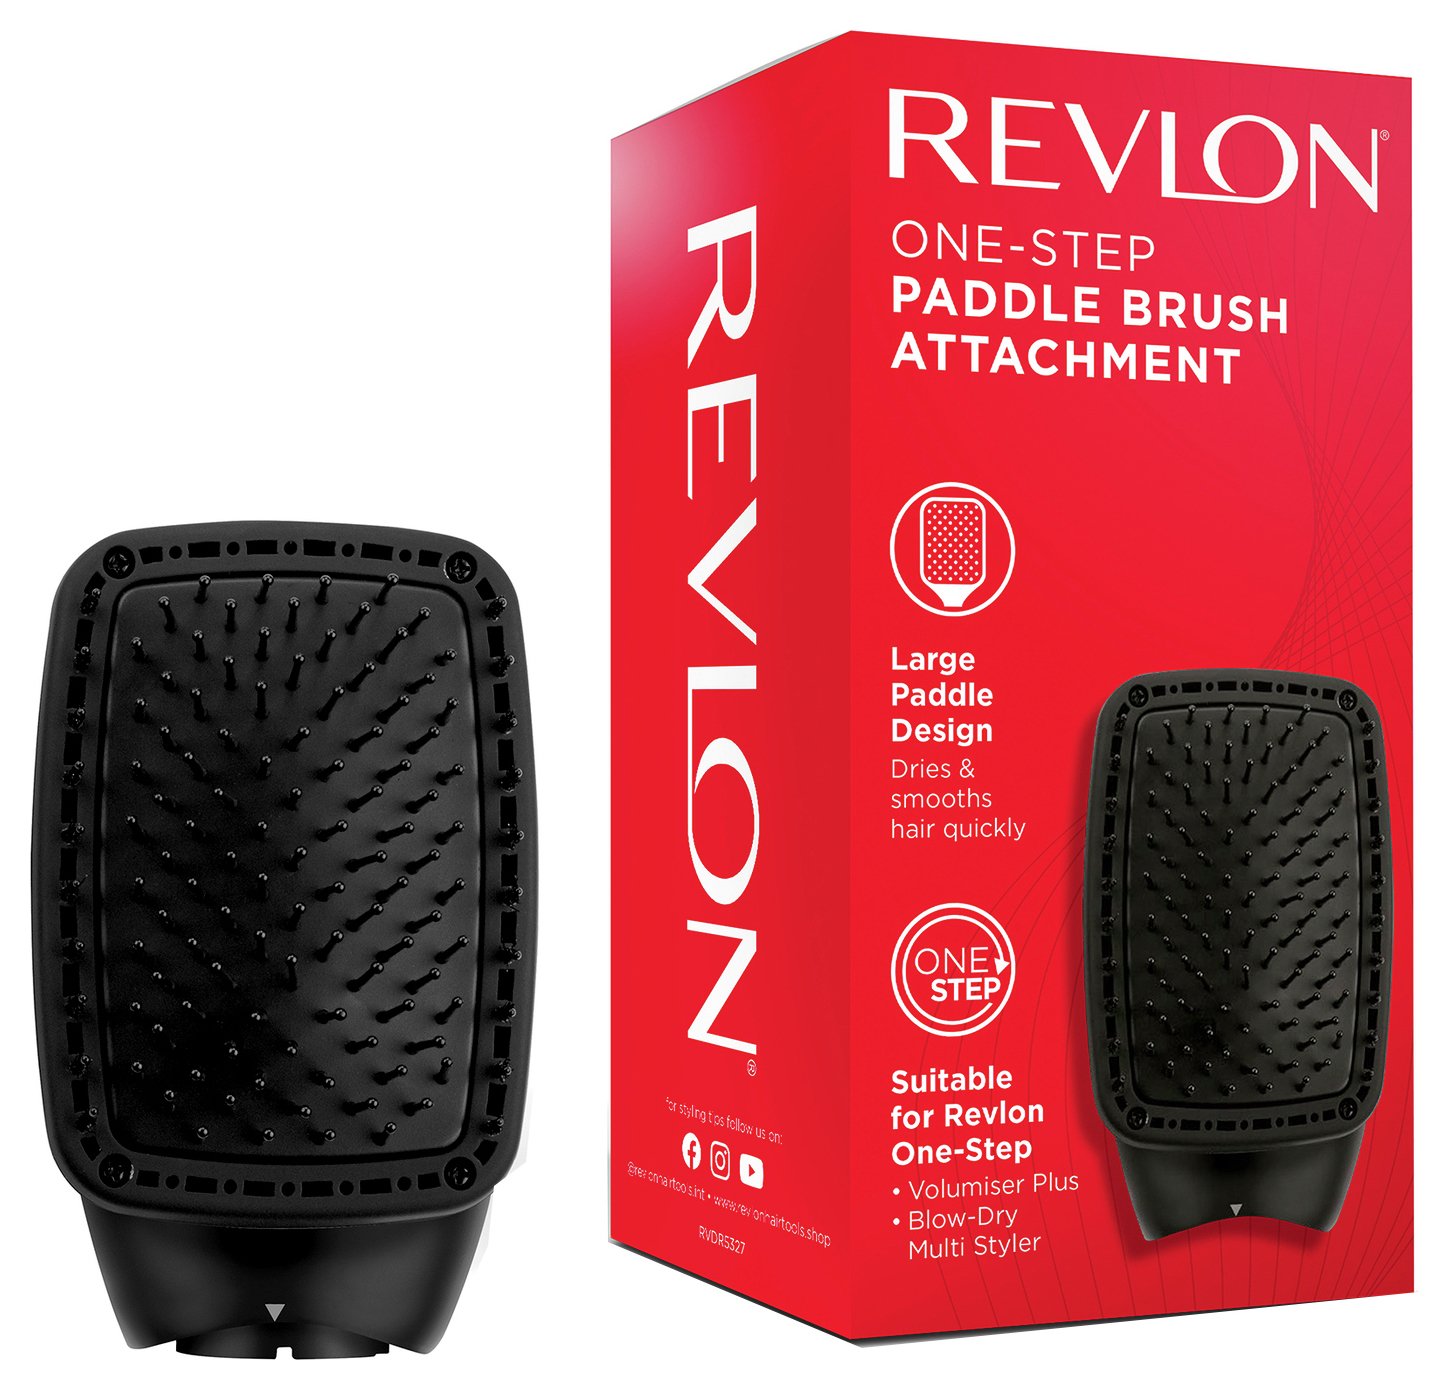 Revlon RVDR5327 One-Step Paddle Brush Head Attachment